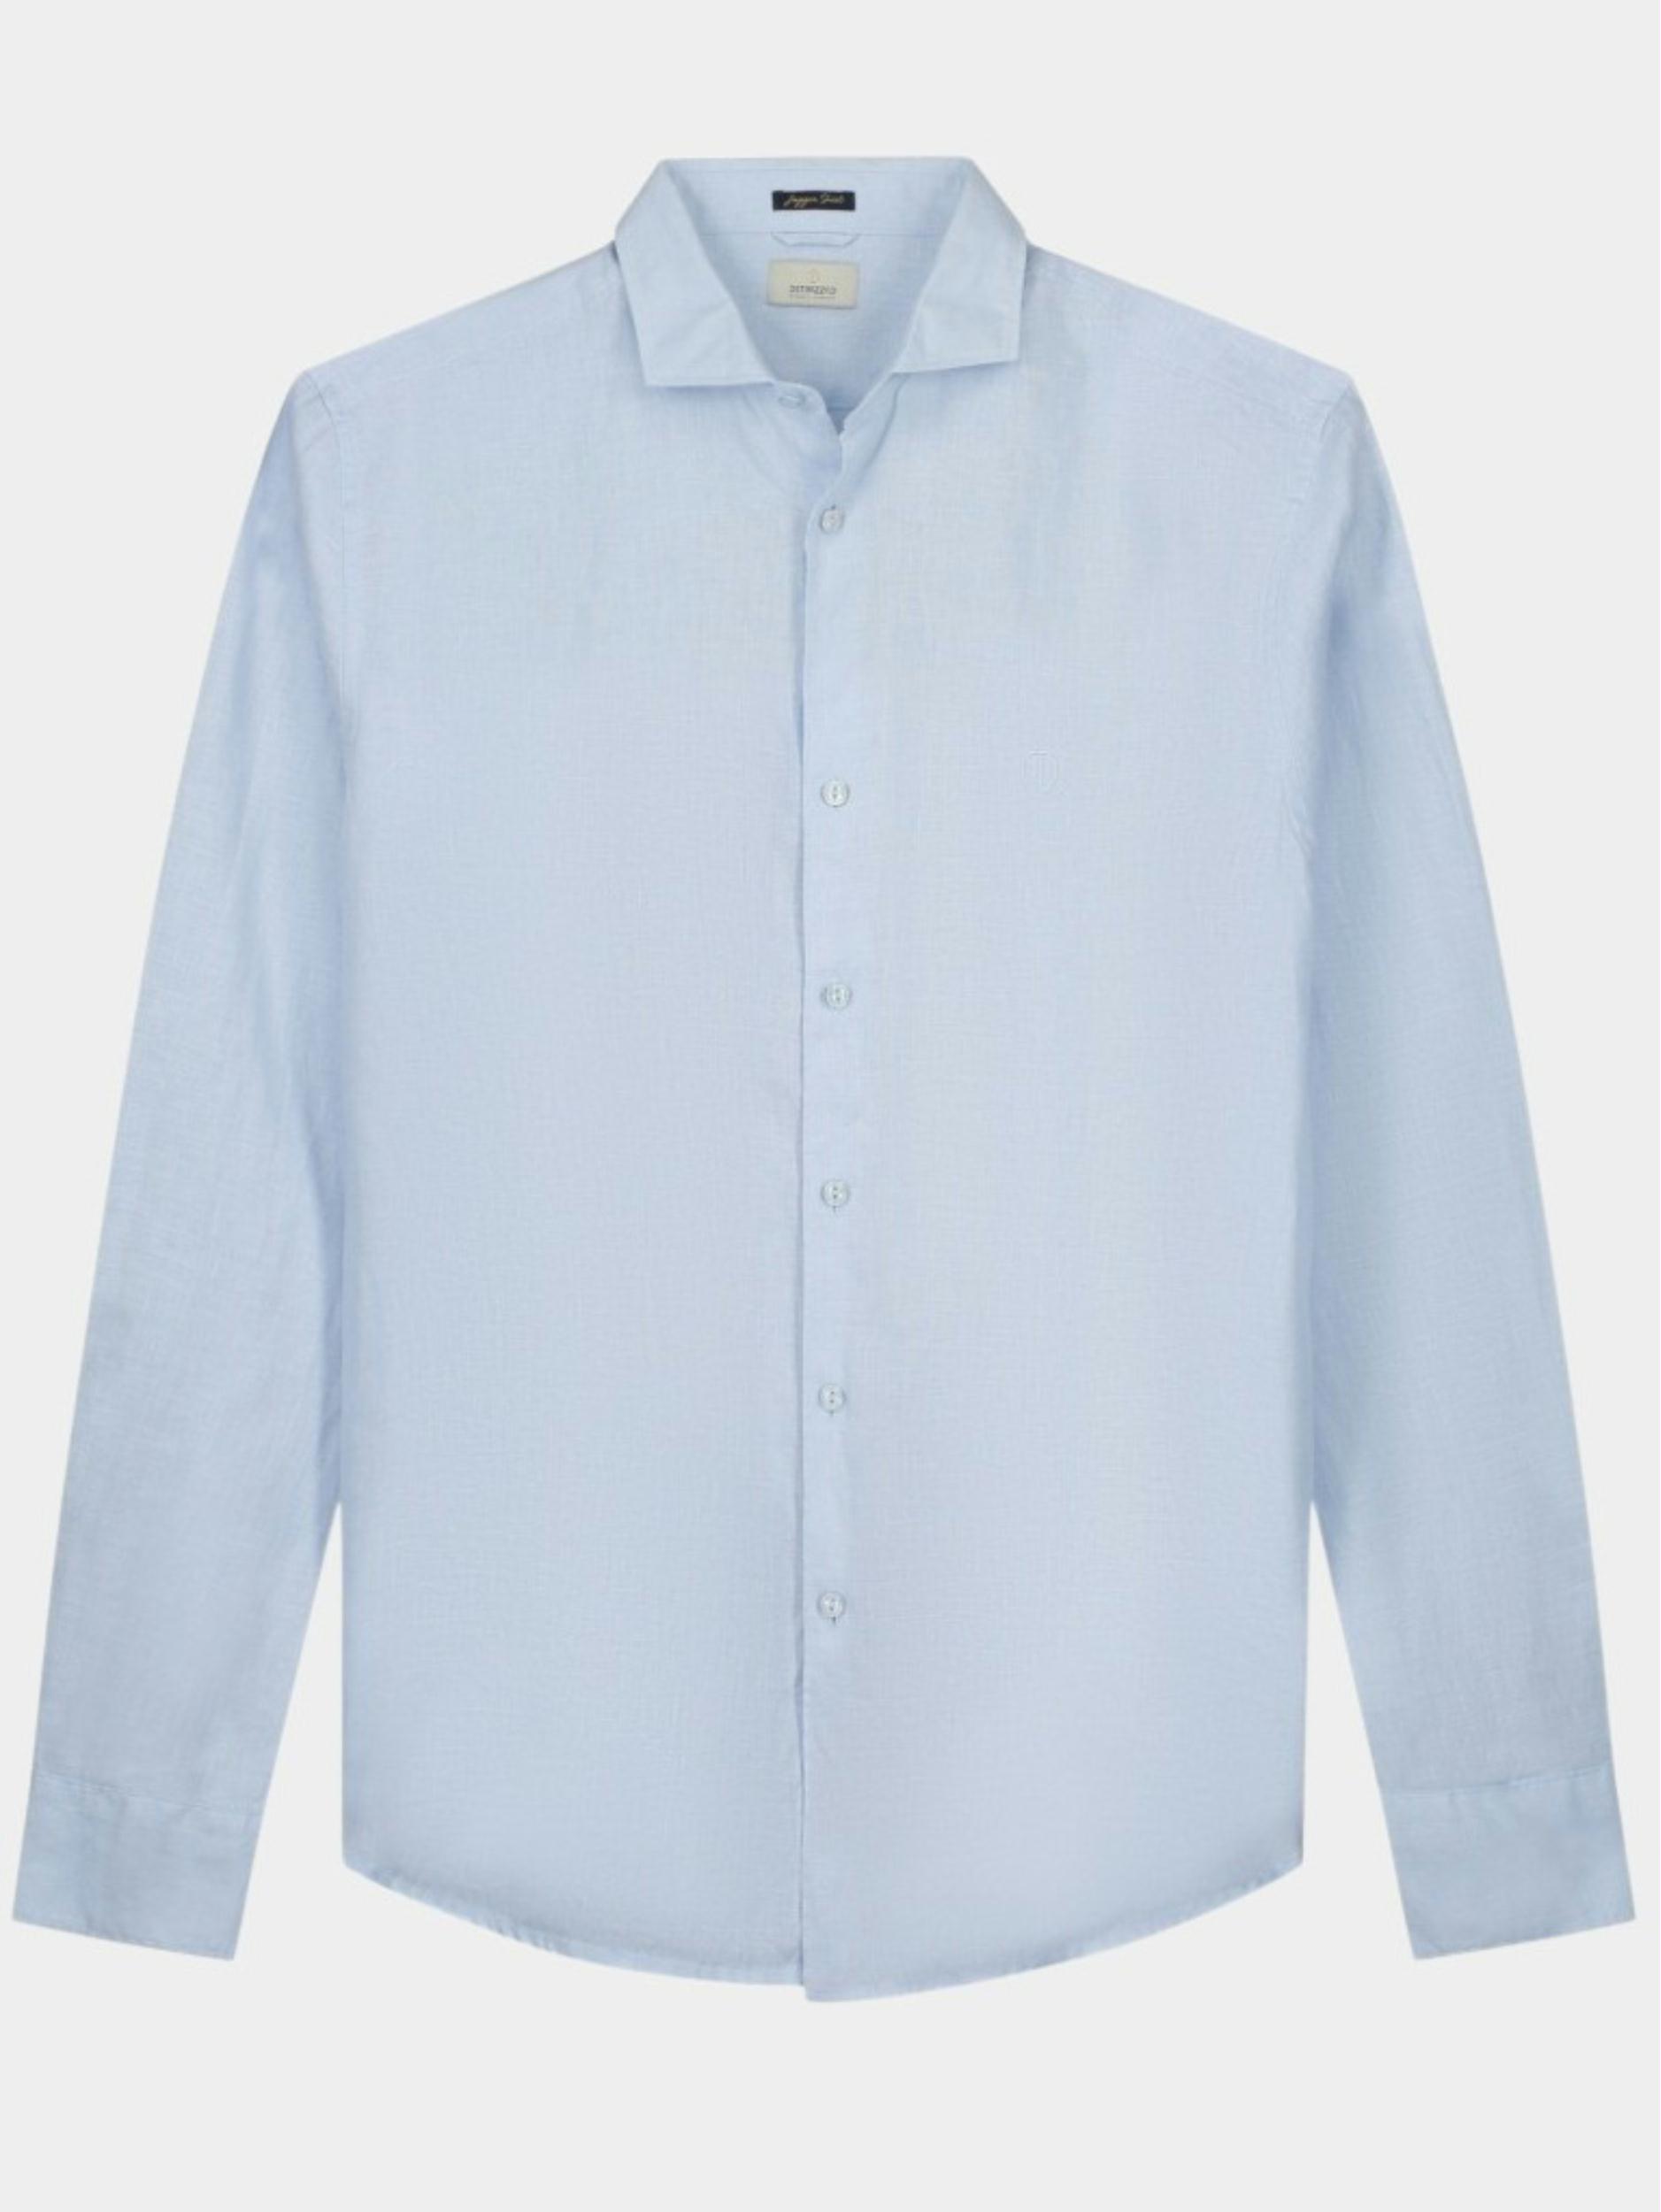 Dstrezzed Casual hemd lange mouw Blauw Jagger Shirt Linen 303710/646